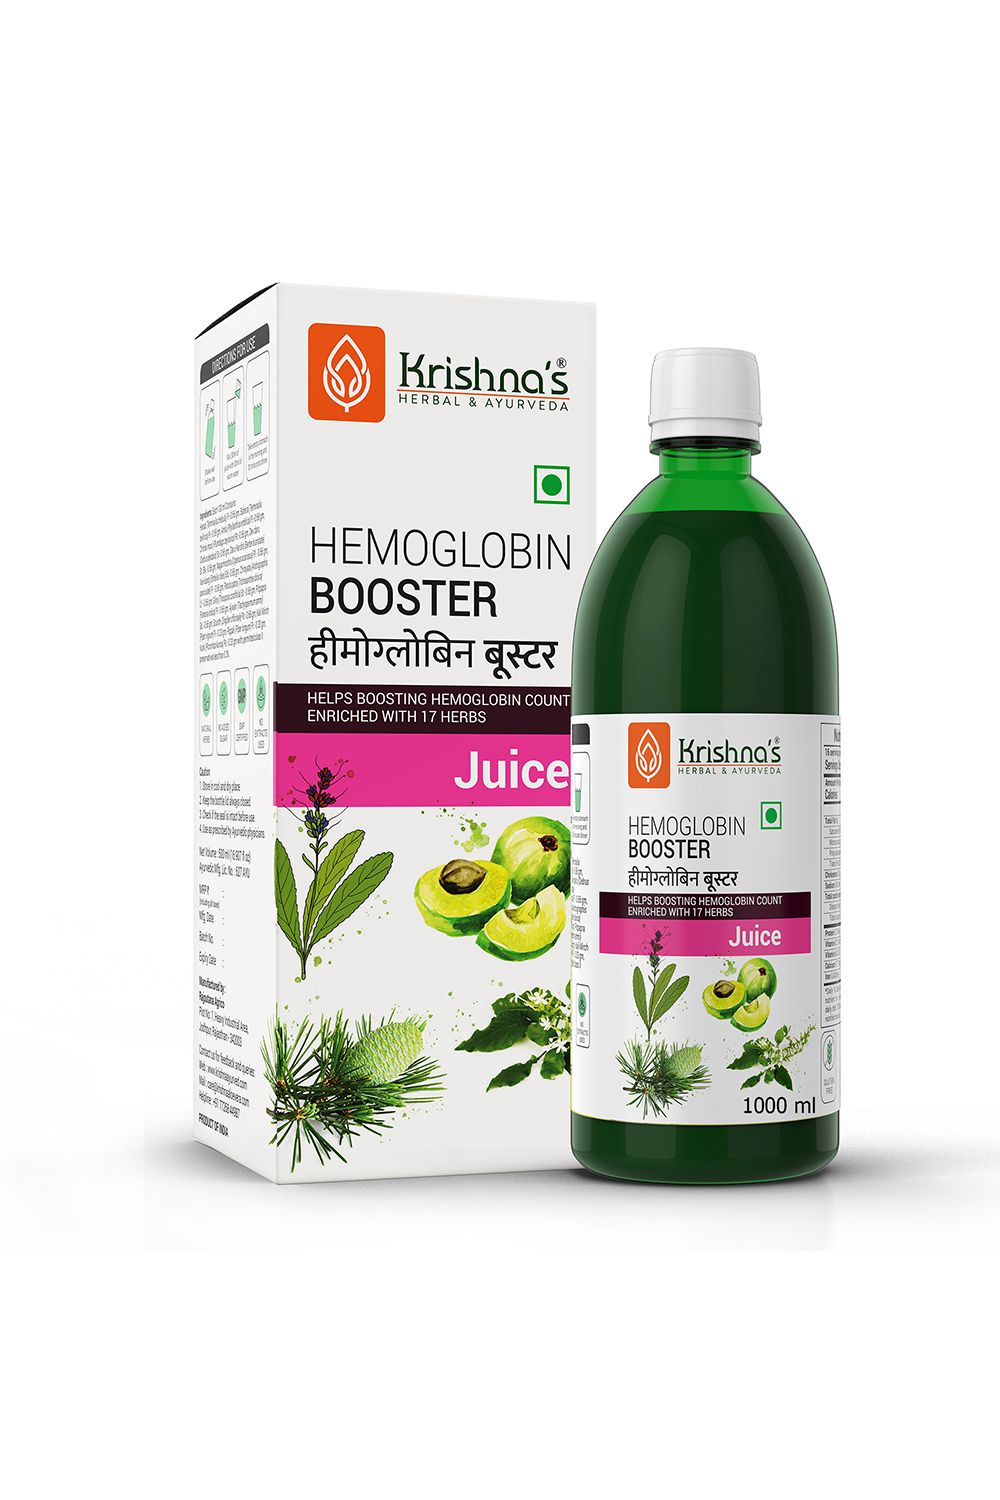     			Krishna's Herbal & Ayurveda Hemoglobin Booster Juice 1000ml